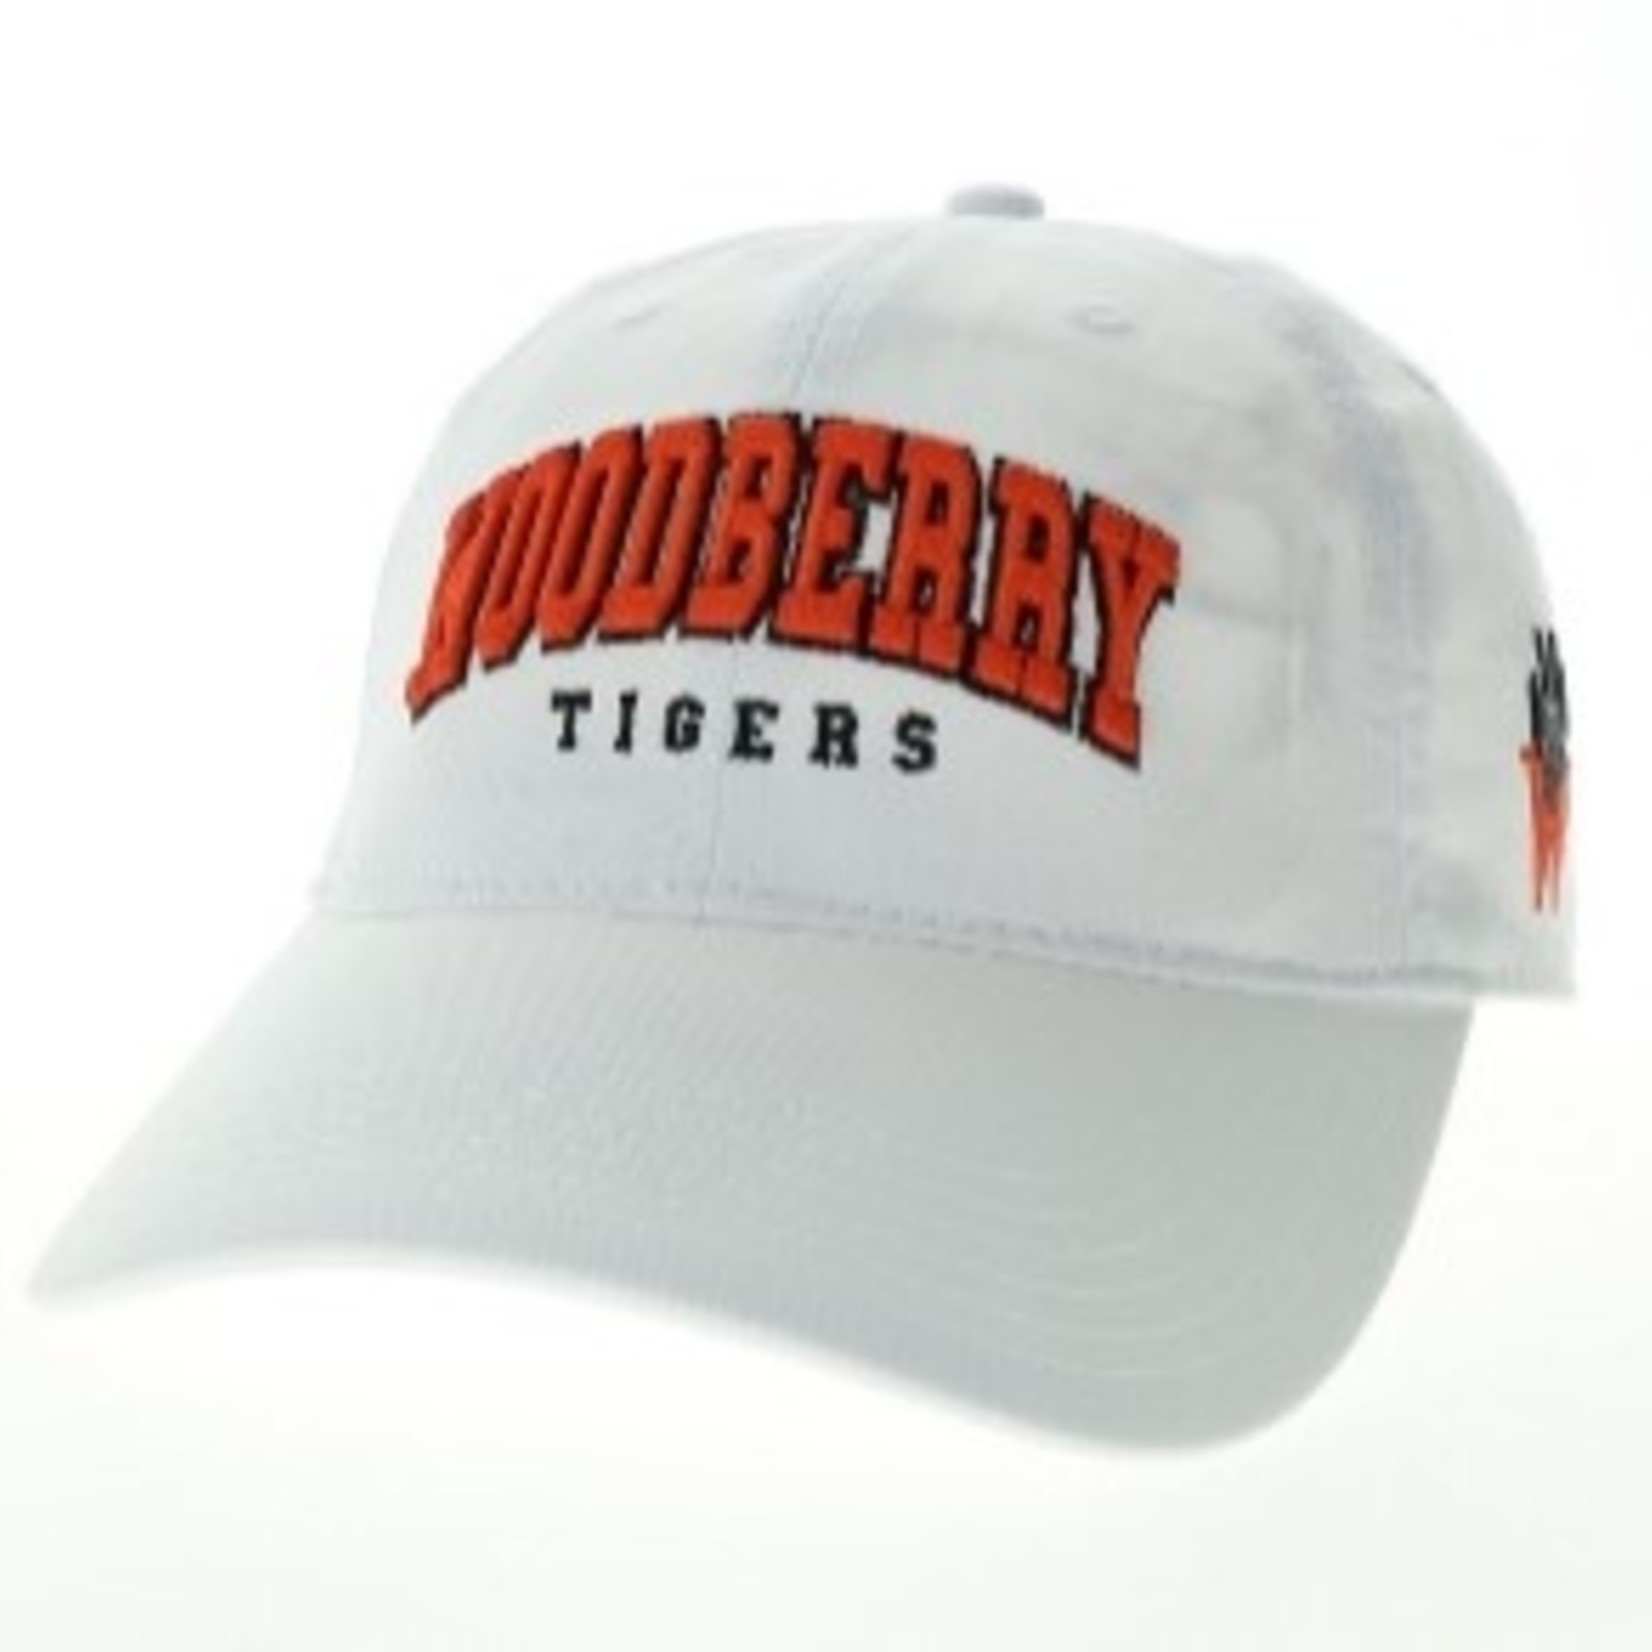 Legacy Legacy Tigers Hat White